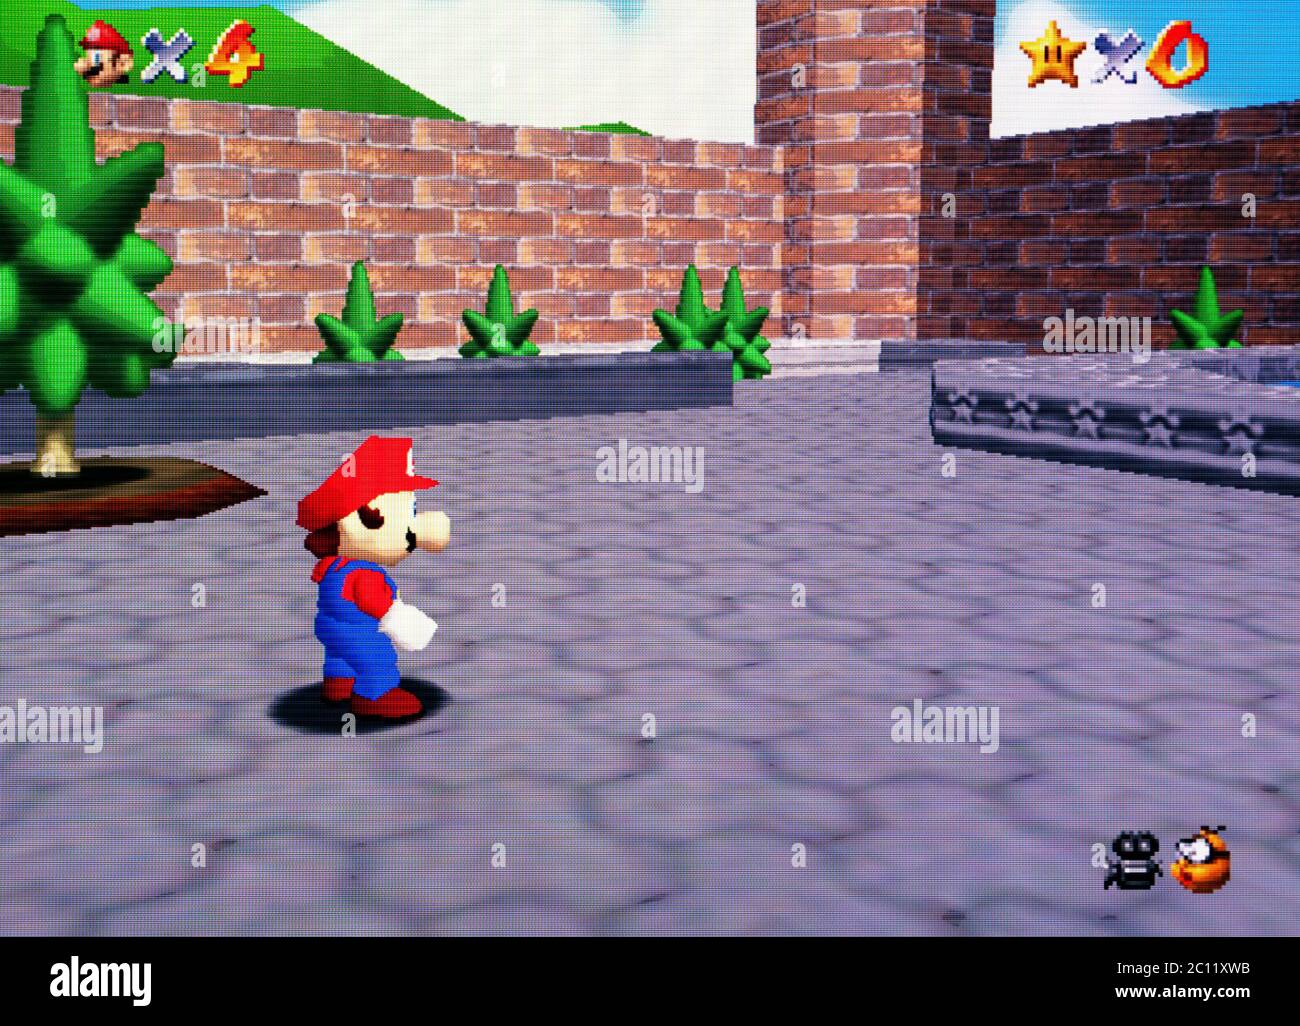 super mario 64 emulator will only walk